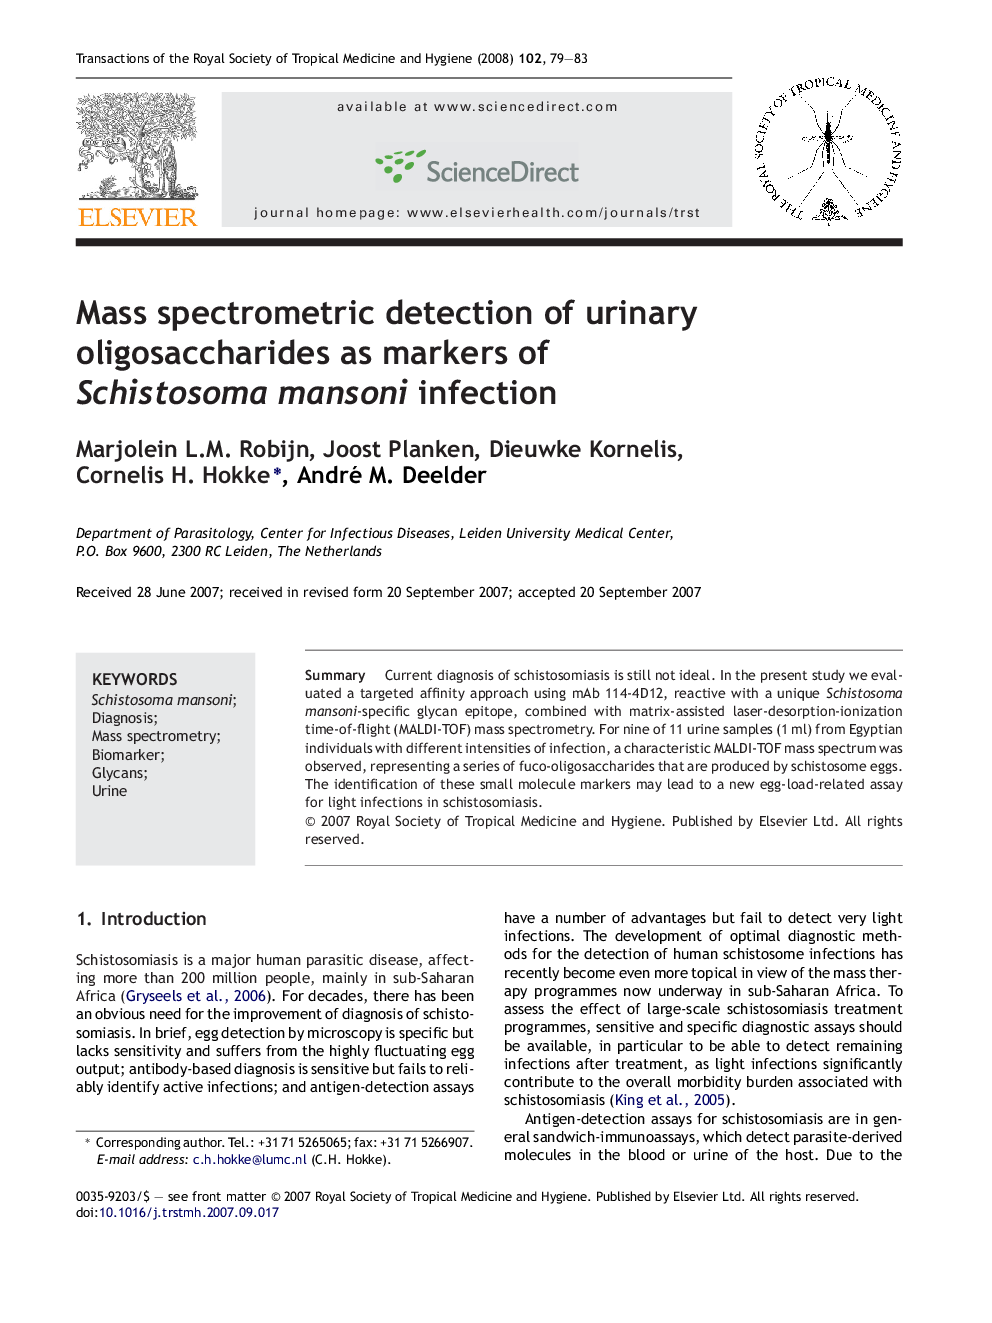 Mass spectrometric detection of urinary oligosaccharides as markers of Schistosoma mansoni infection